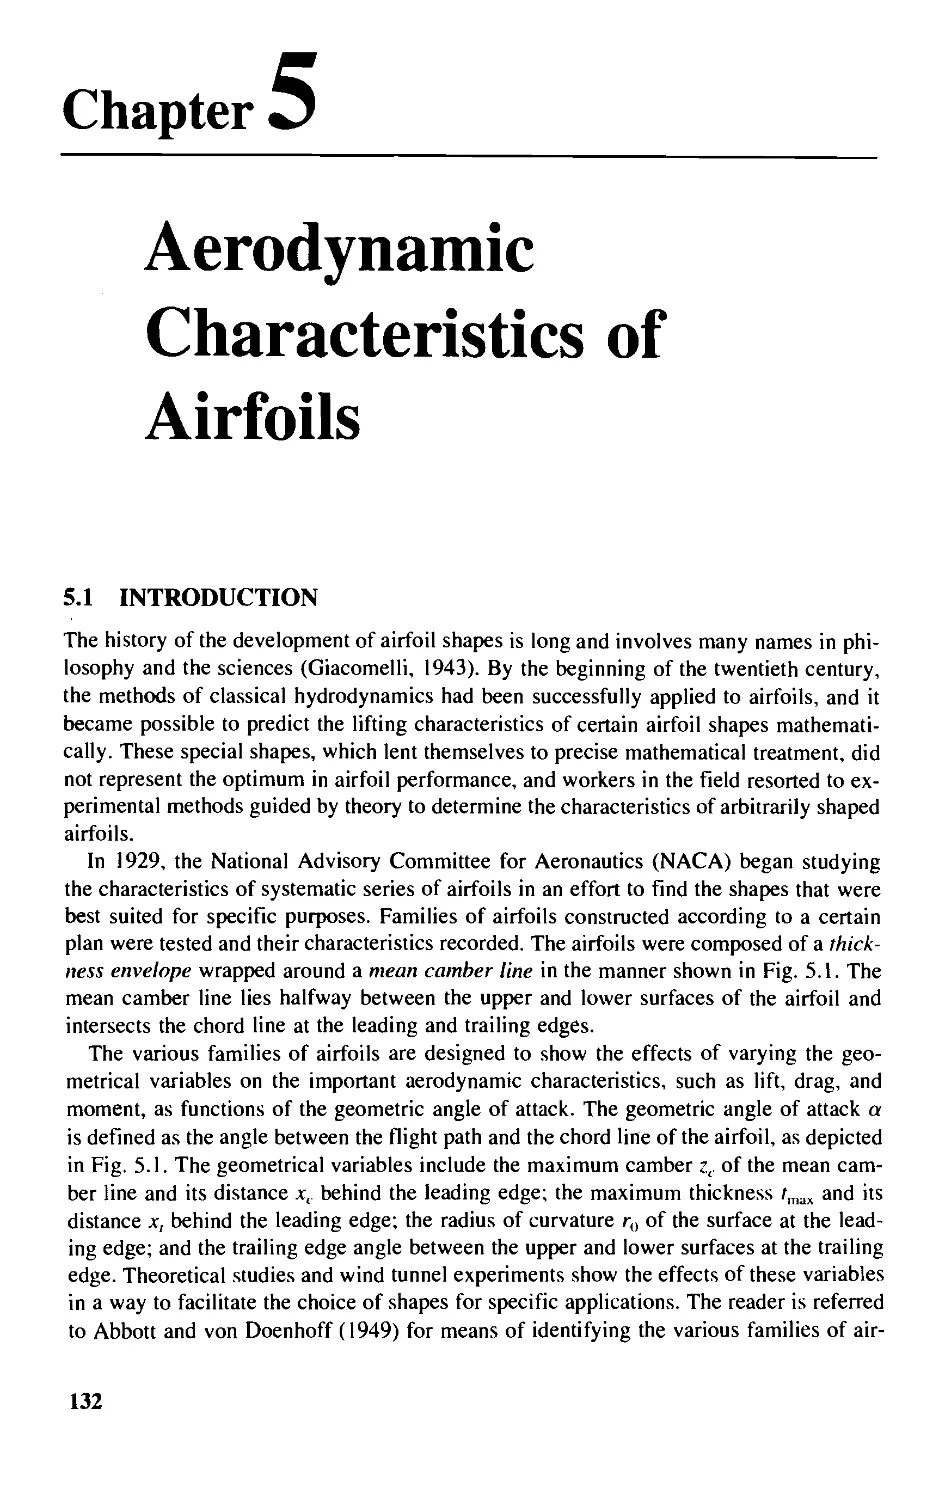 Chapter 5 - Aerodynamics Characteristics of Airfoils